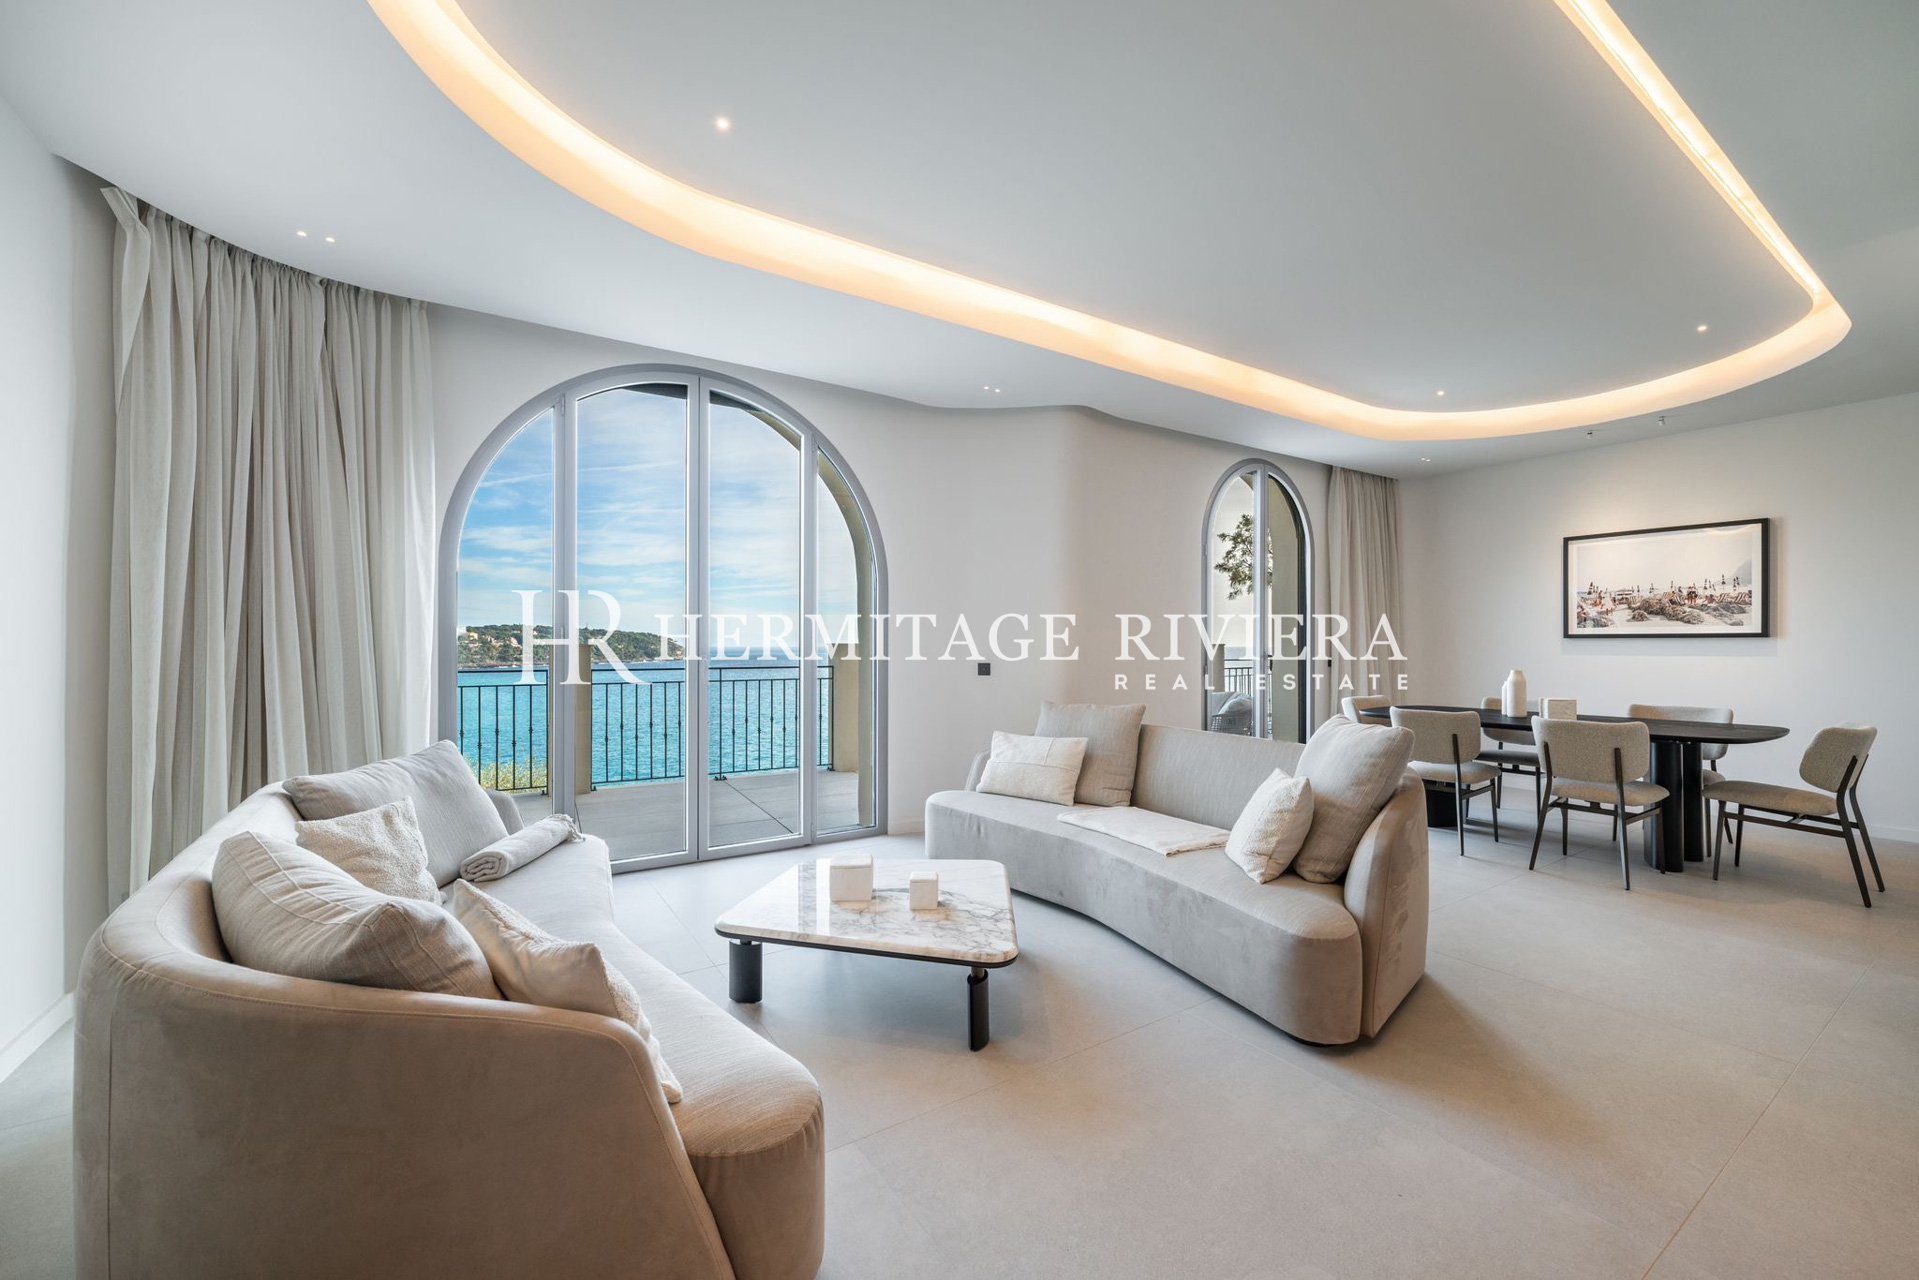 Recently renovated contemporary villa near Monaco (image 5)